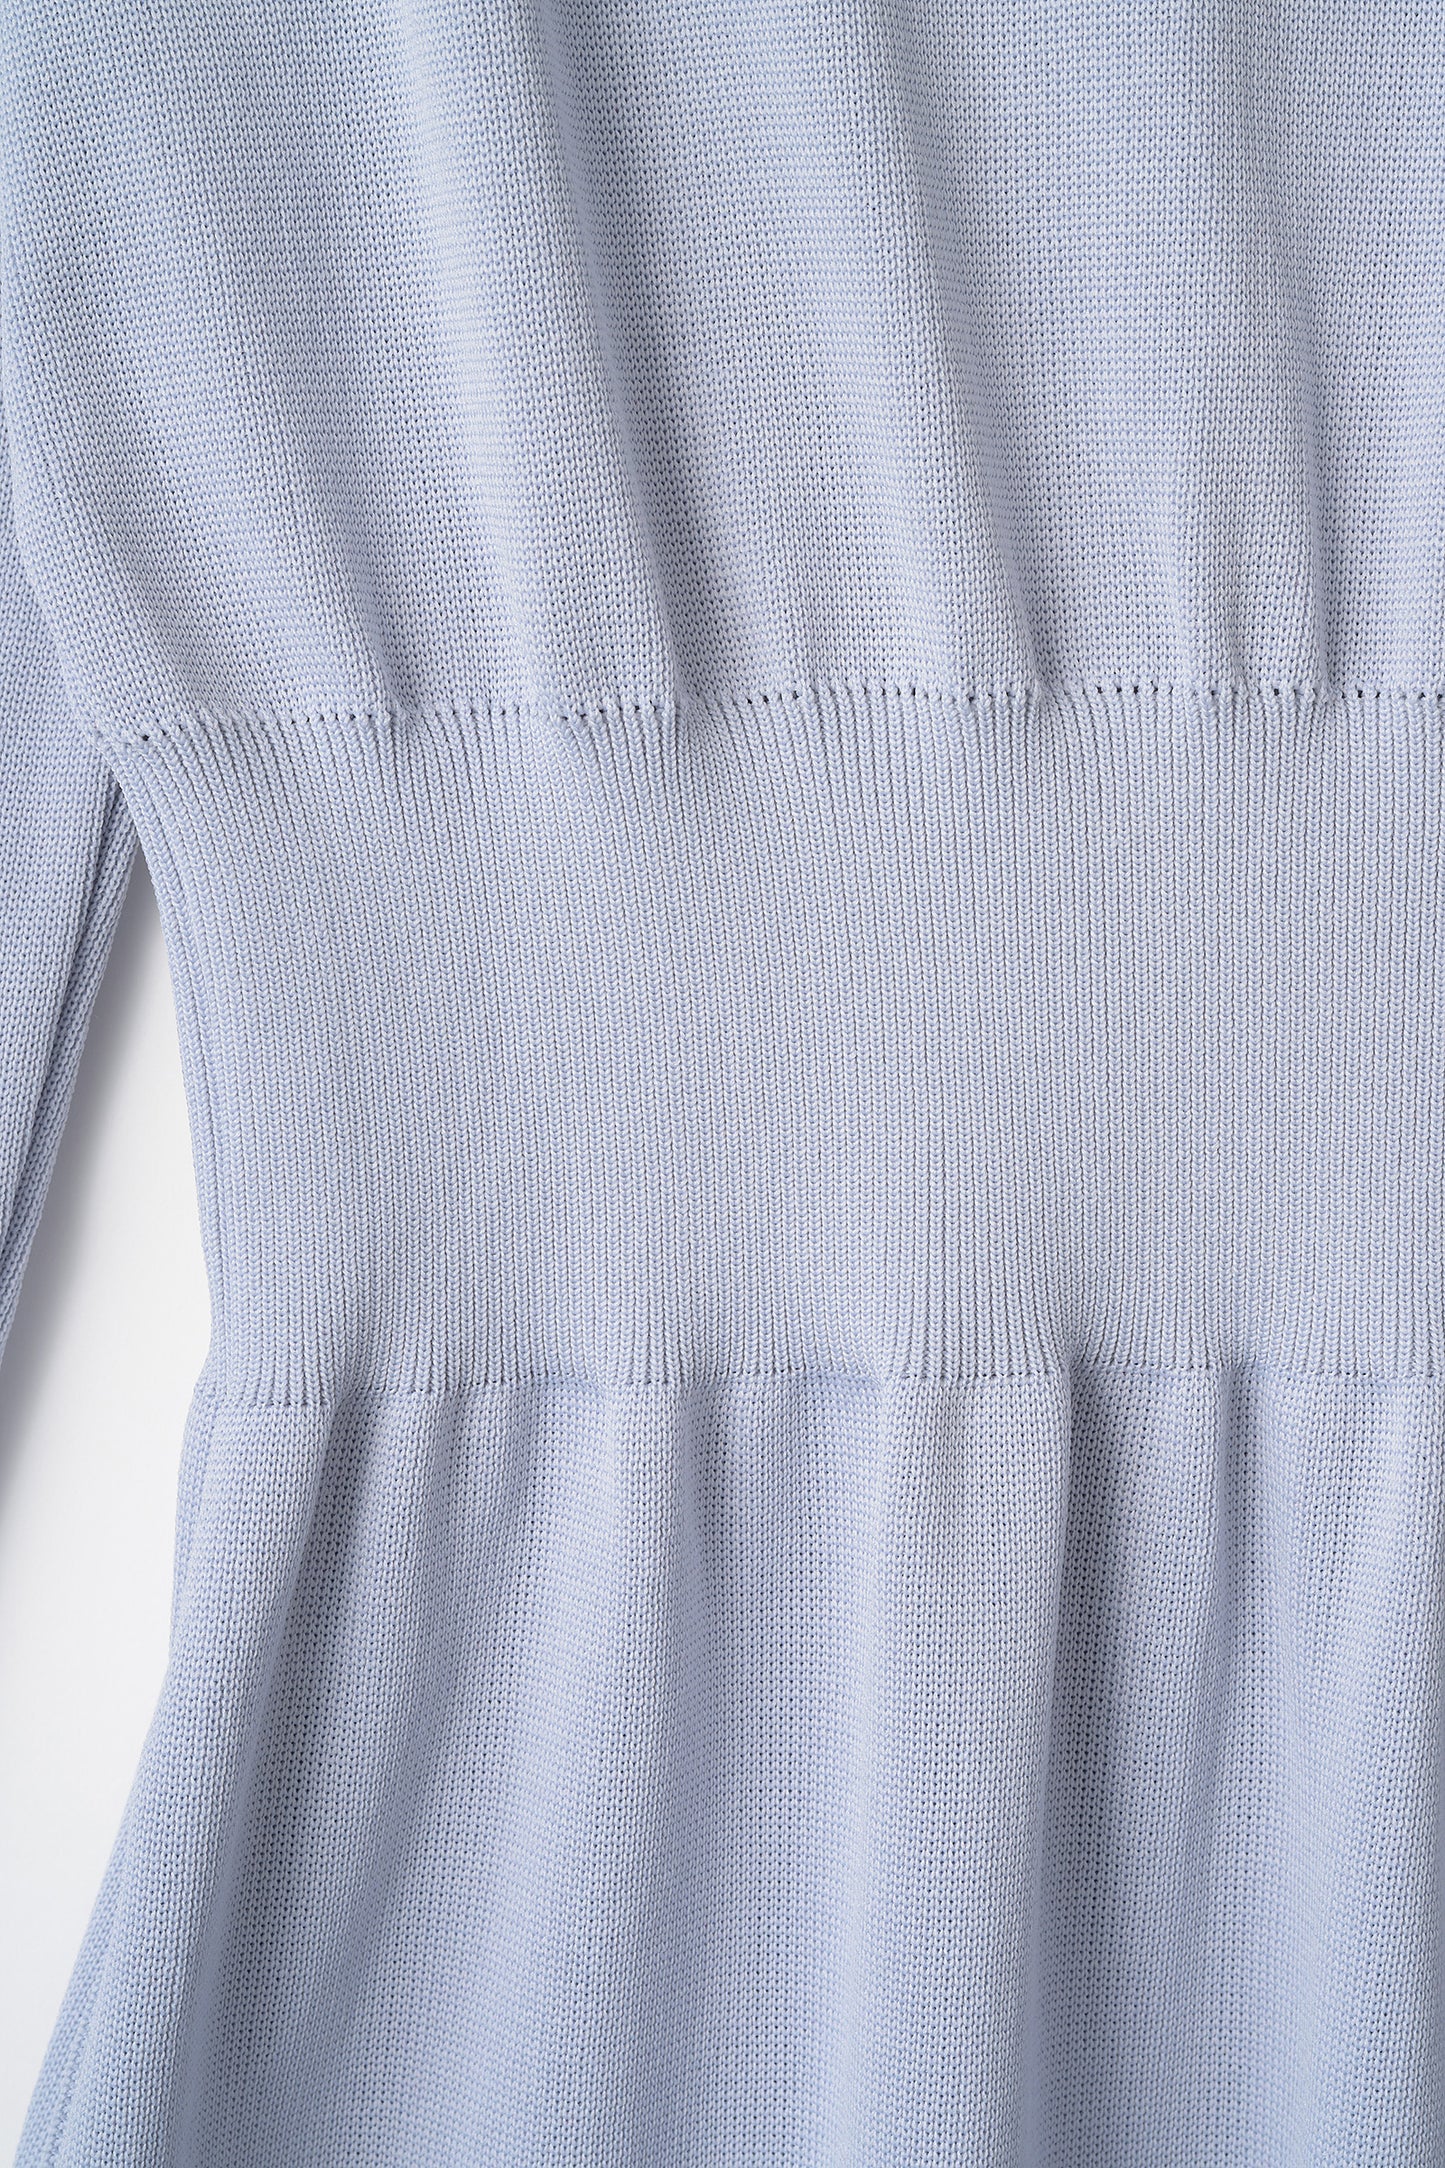 Elastic knit dress (Blue gray)